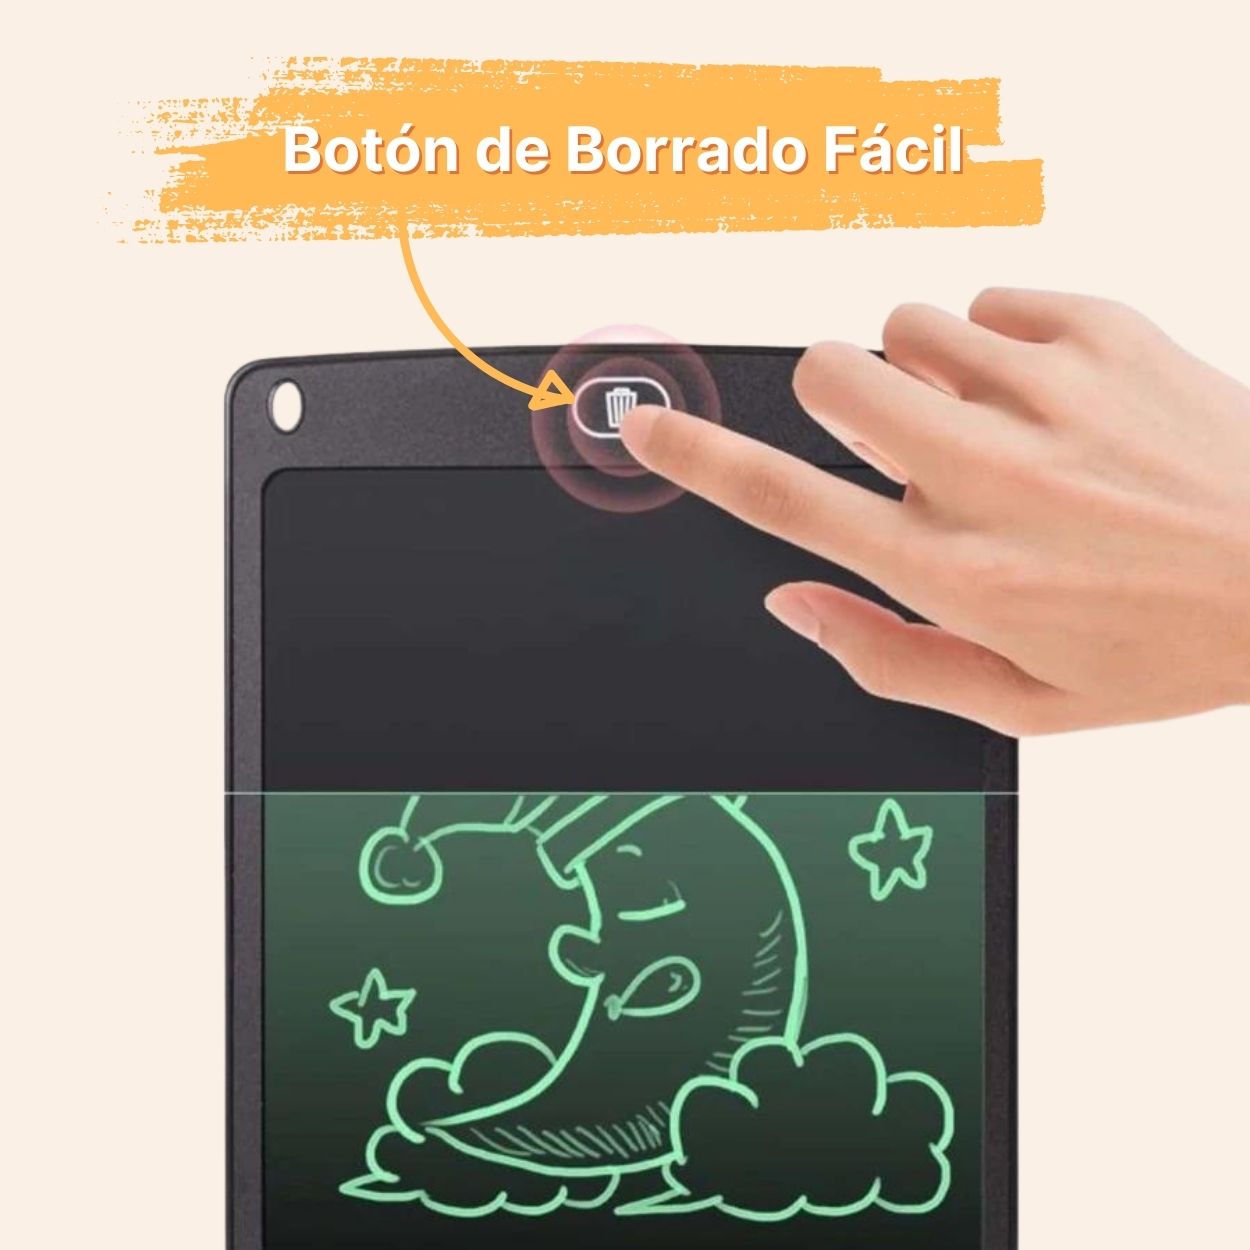 Oferta 1+1 GRATIS: Tableta Digital de Dibujo y Escritura LCD